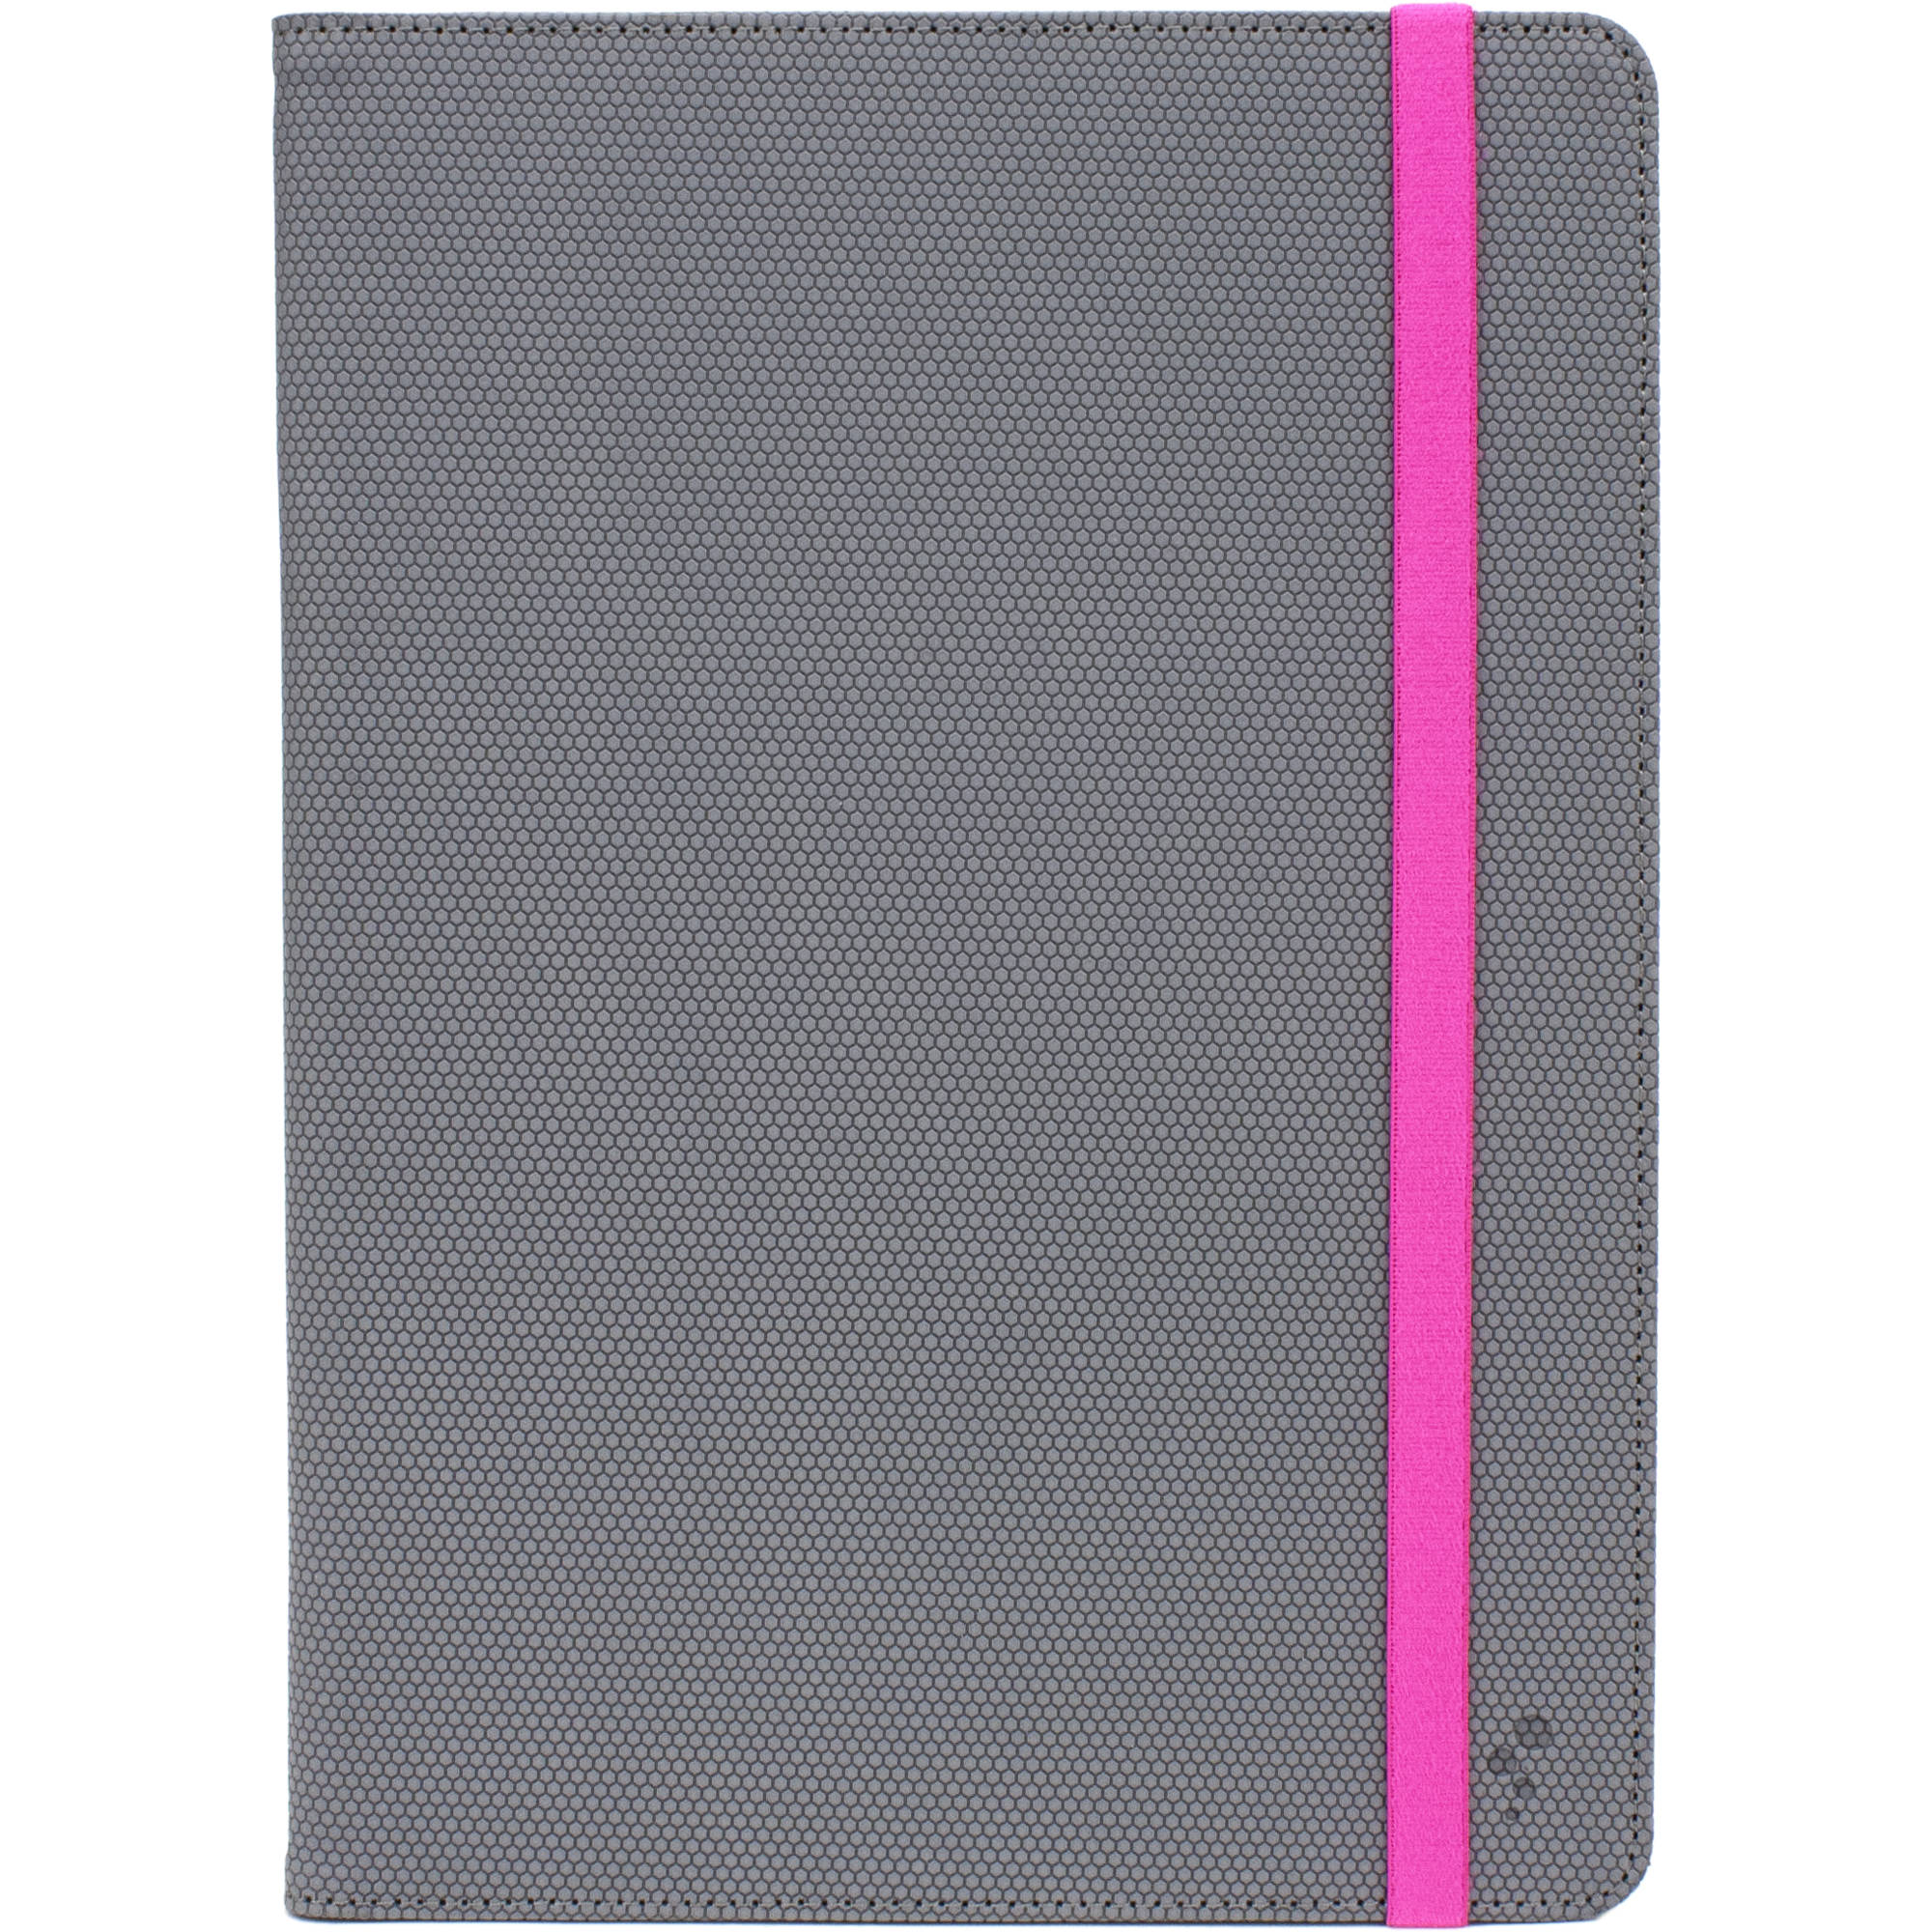 M-Edge Folio Plus for 7"/8" Tablets (Grey/Pink)